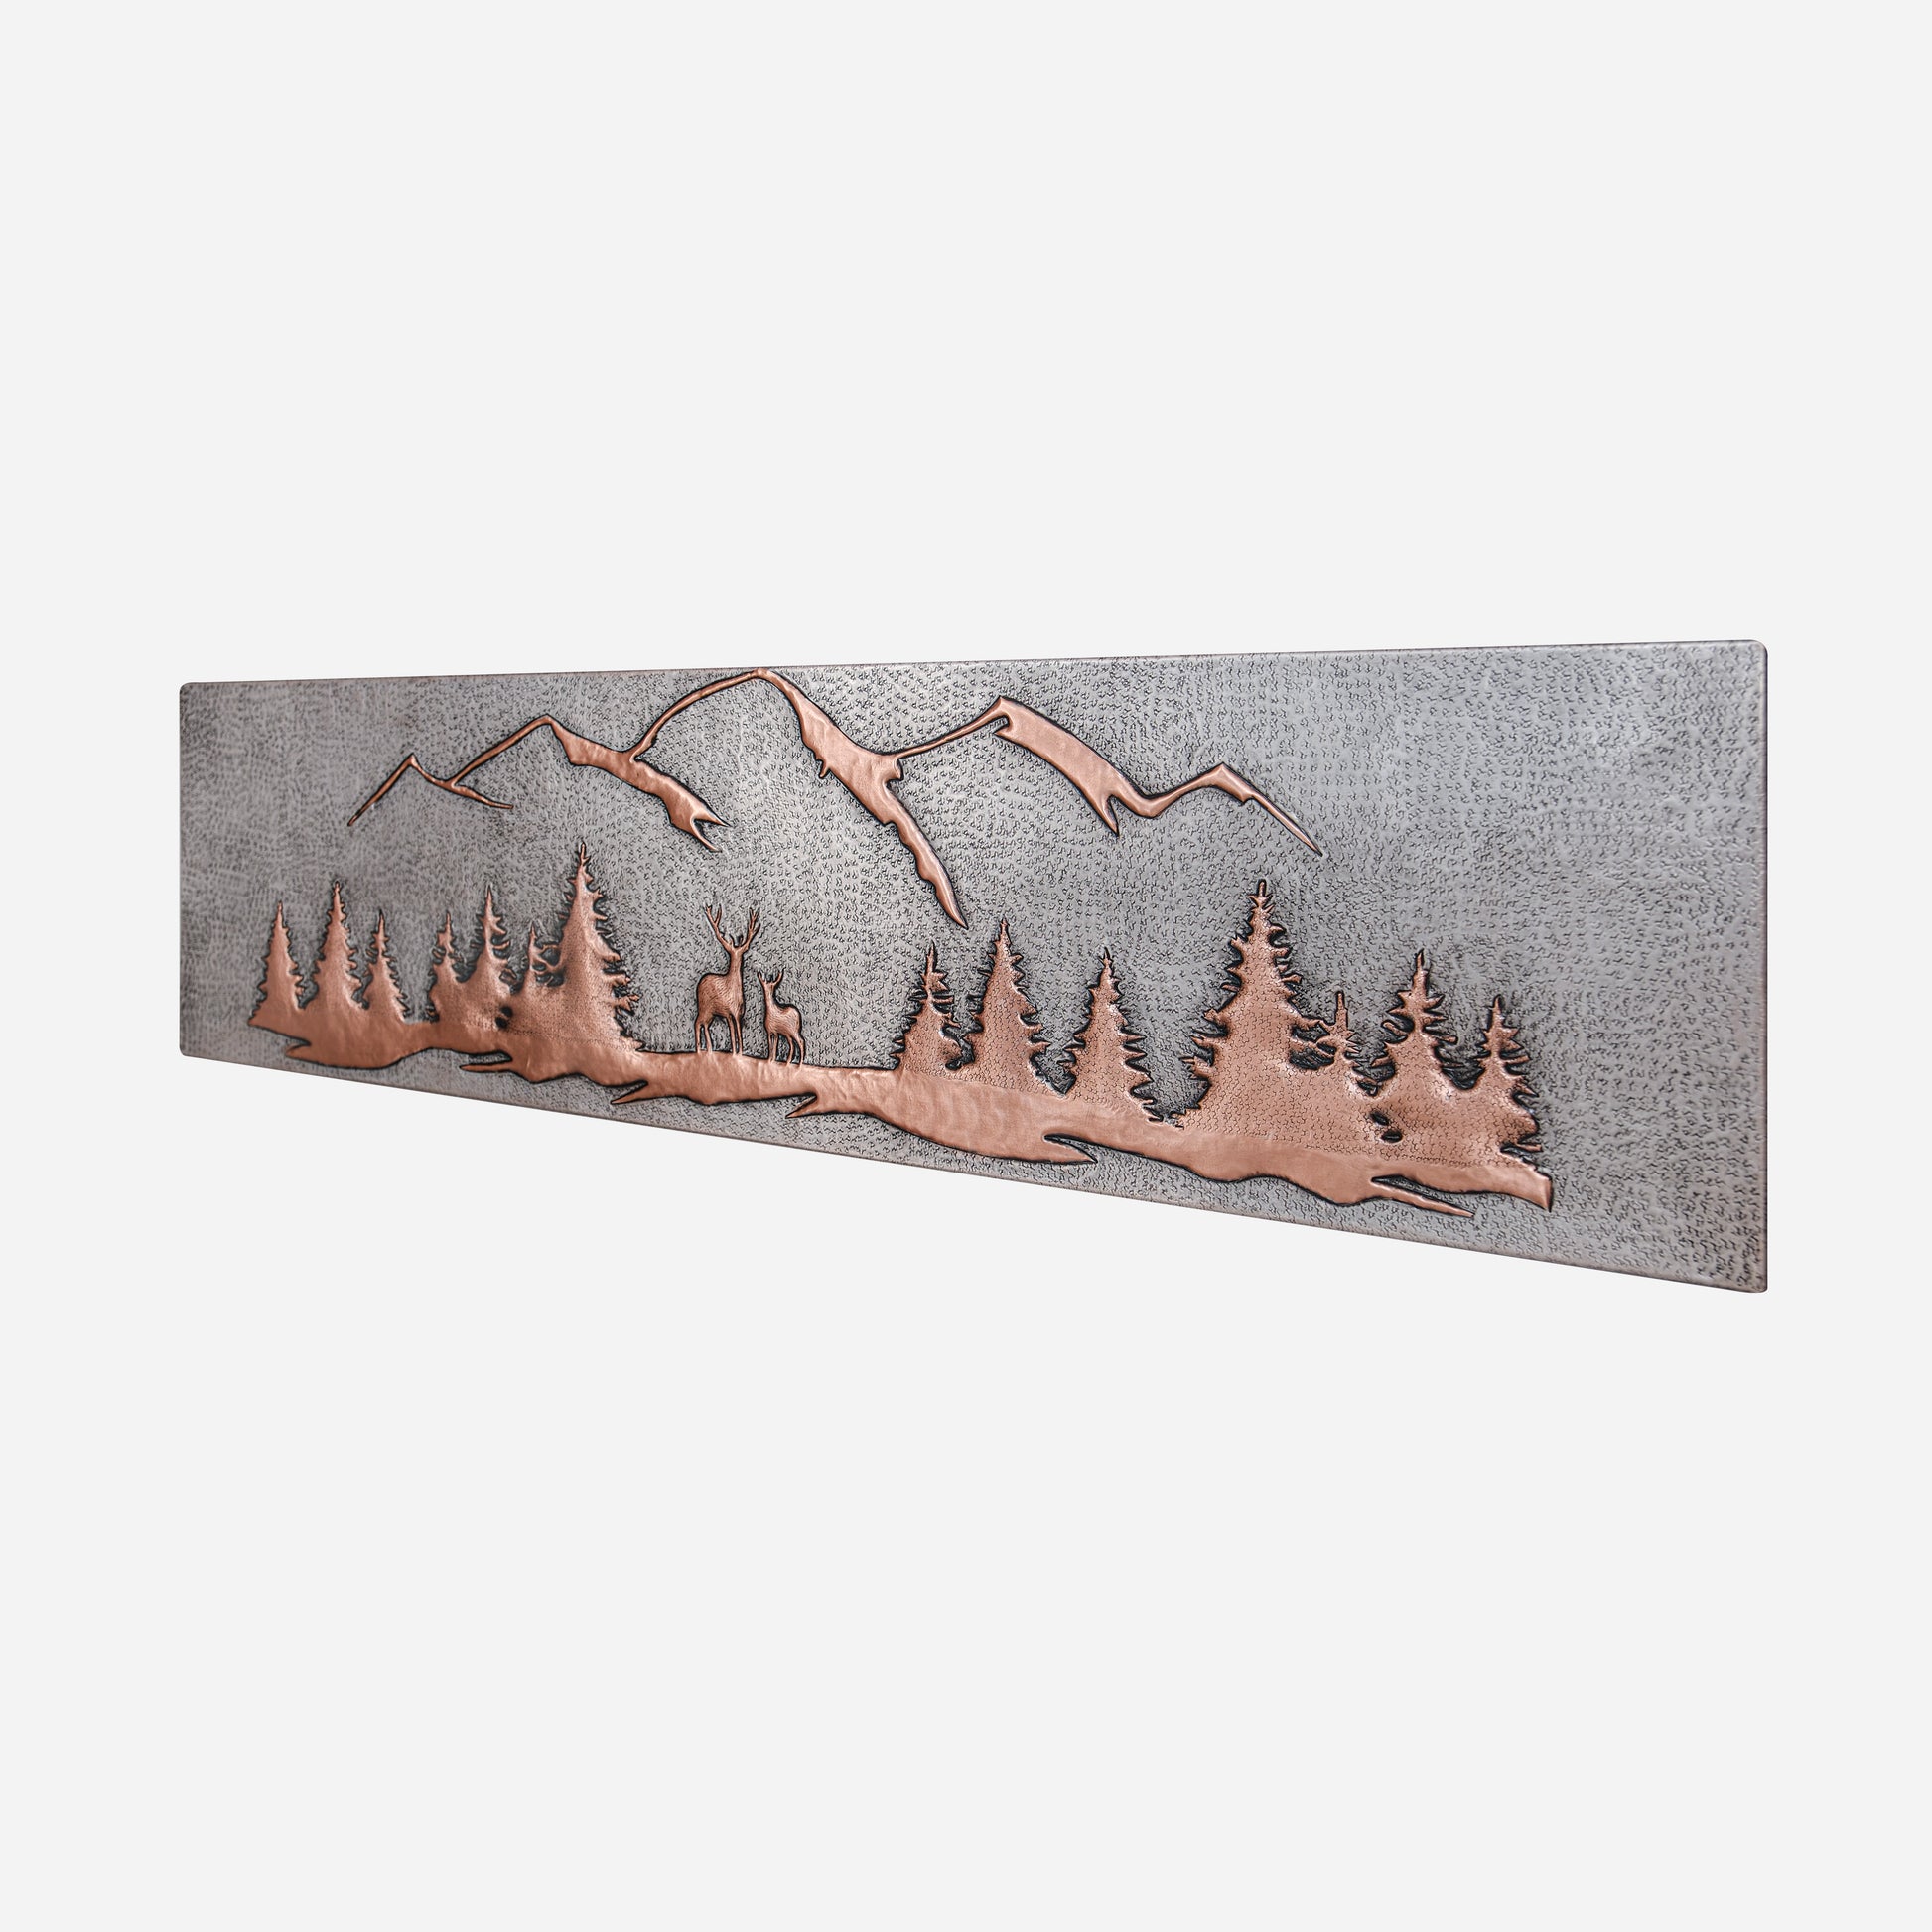 Large Copper Backsplash Panel (Deer, Pine Trees and Mountains, Silver&Copper Color)